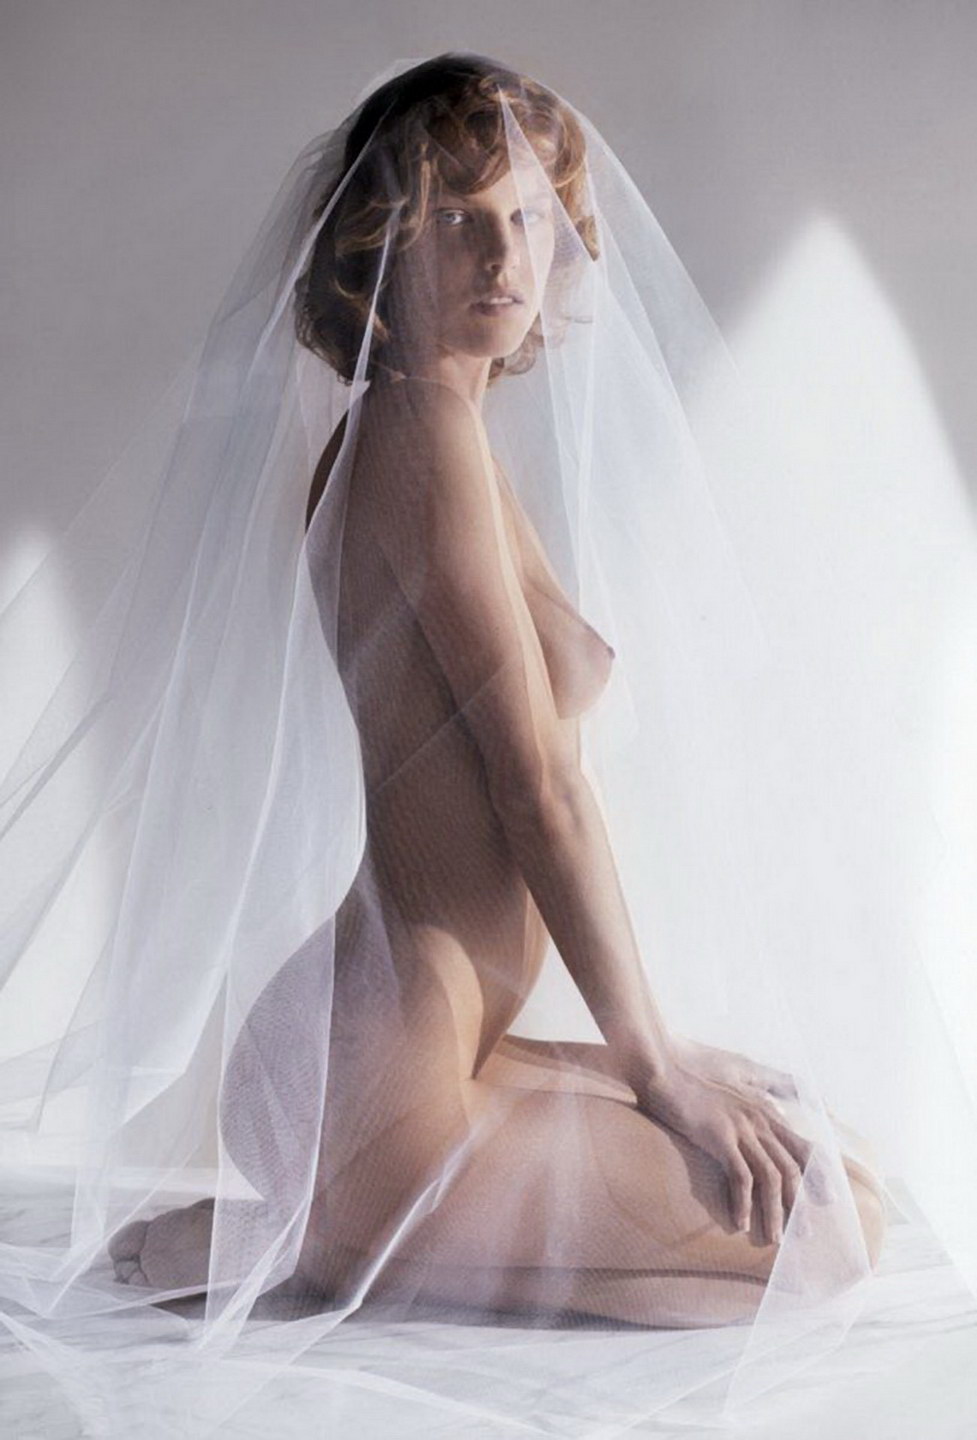 Eva Herzigova nude photo shoot for Playboy magazine 8x MixQ 8.jpg